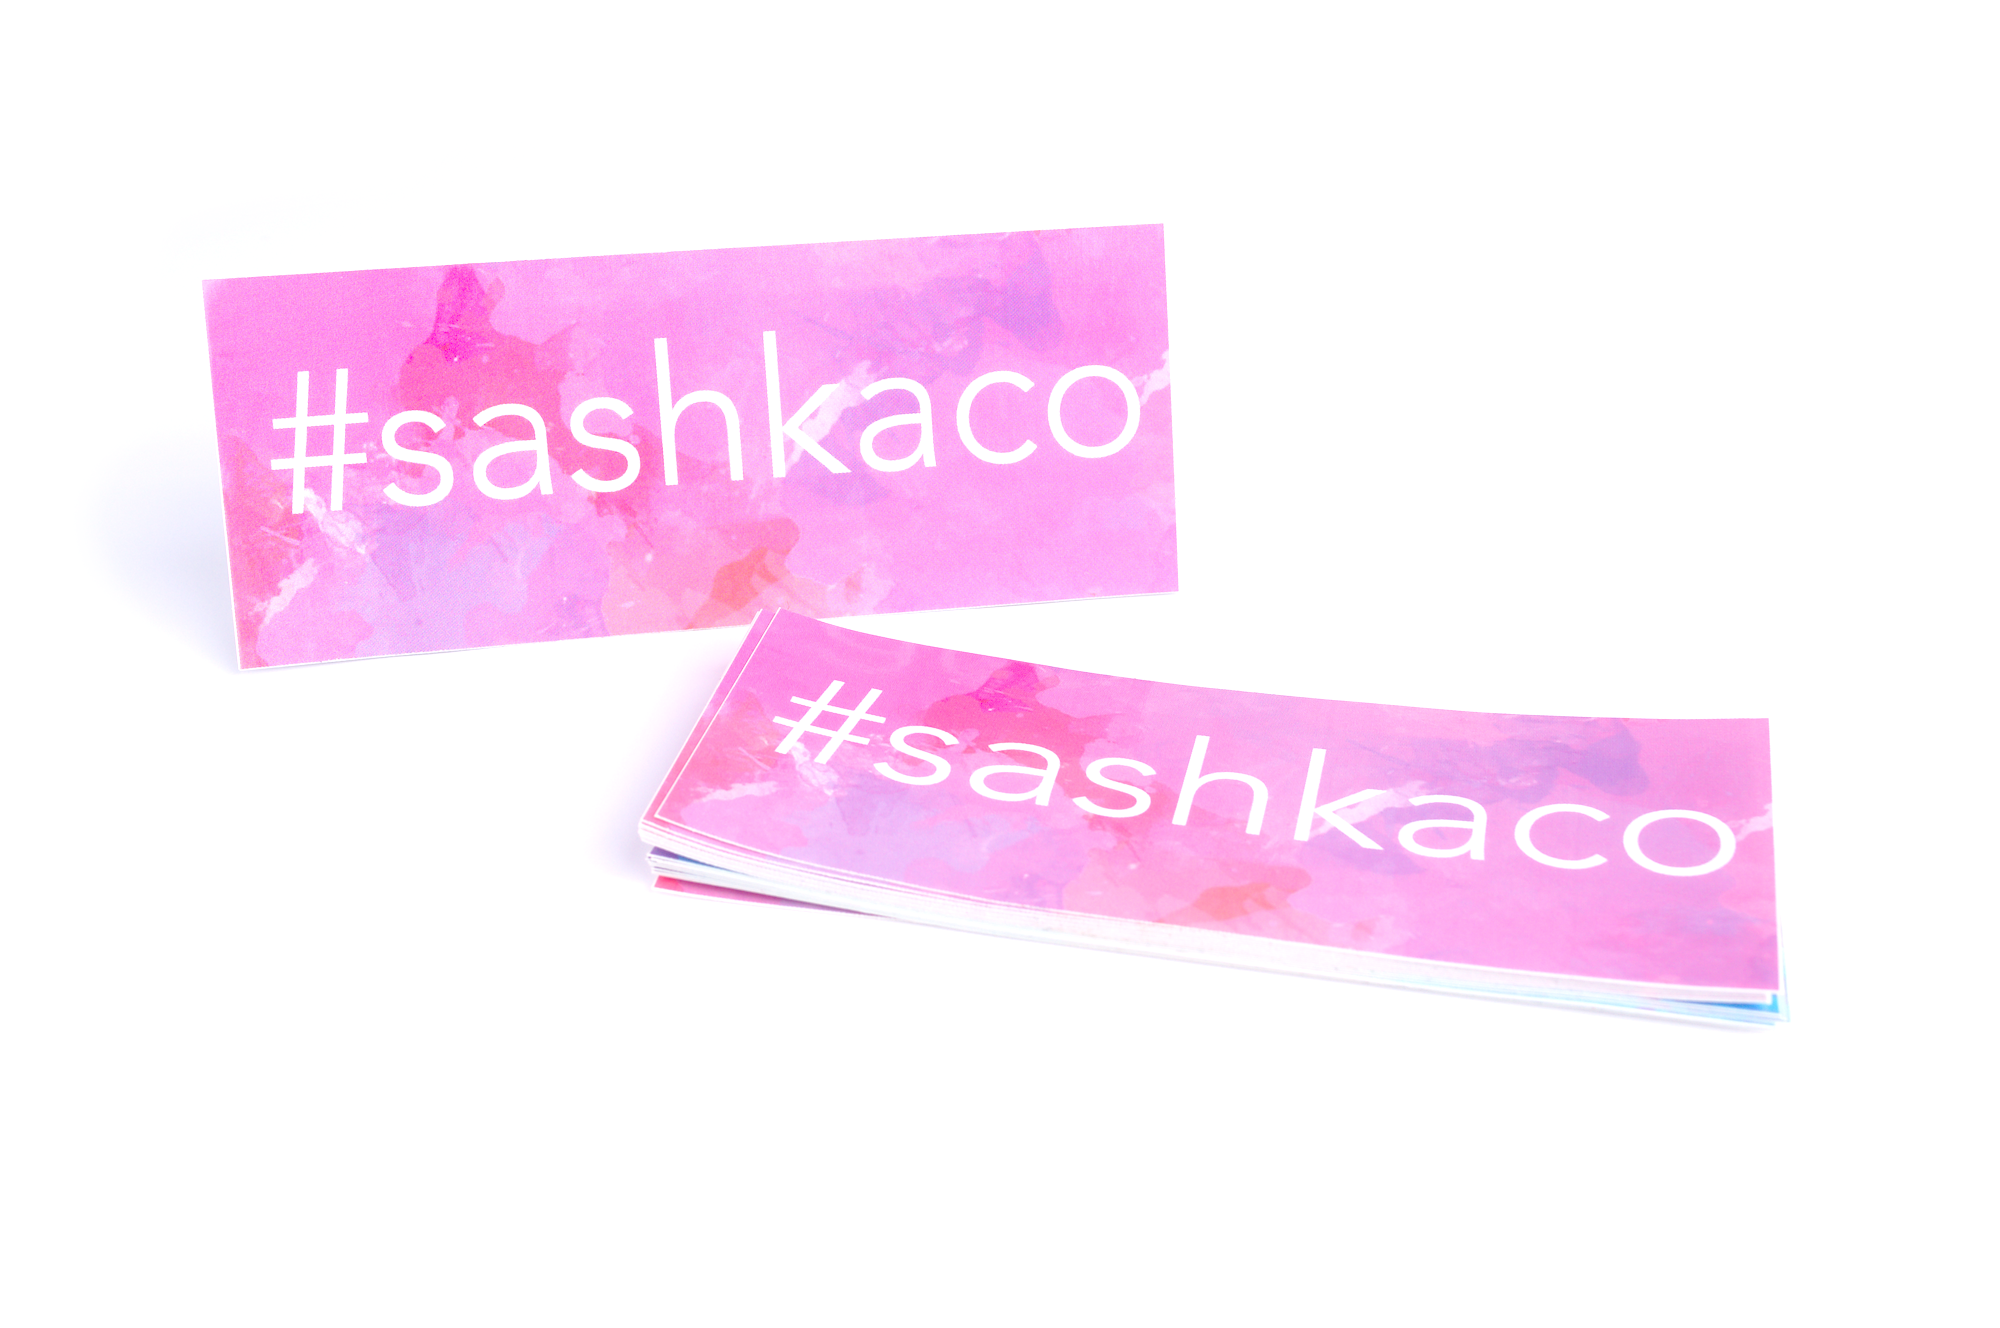 Sashka Co. Extended 8" Bracelet Teal/Black/Pink/White Limited Edition Bracelet - Extended 8"